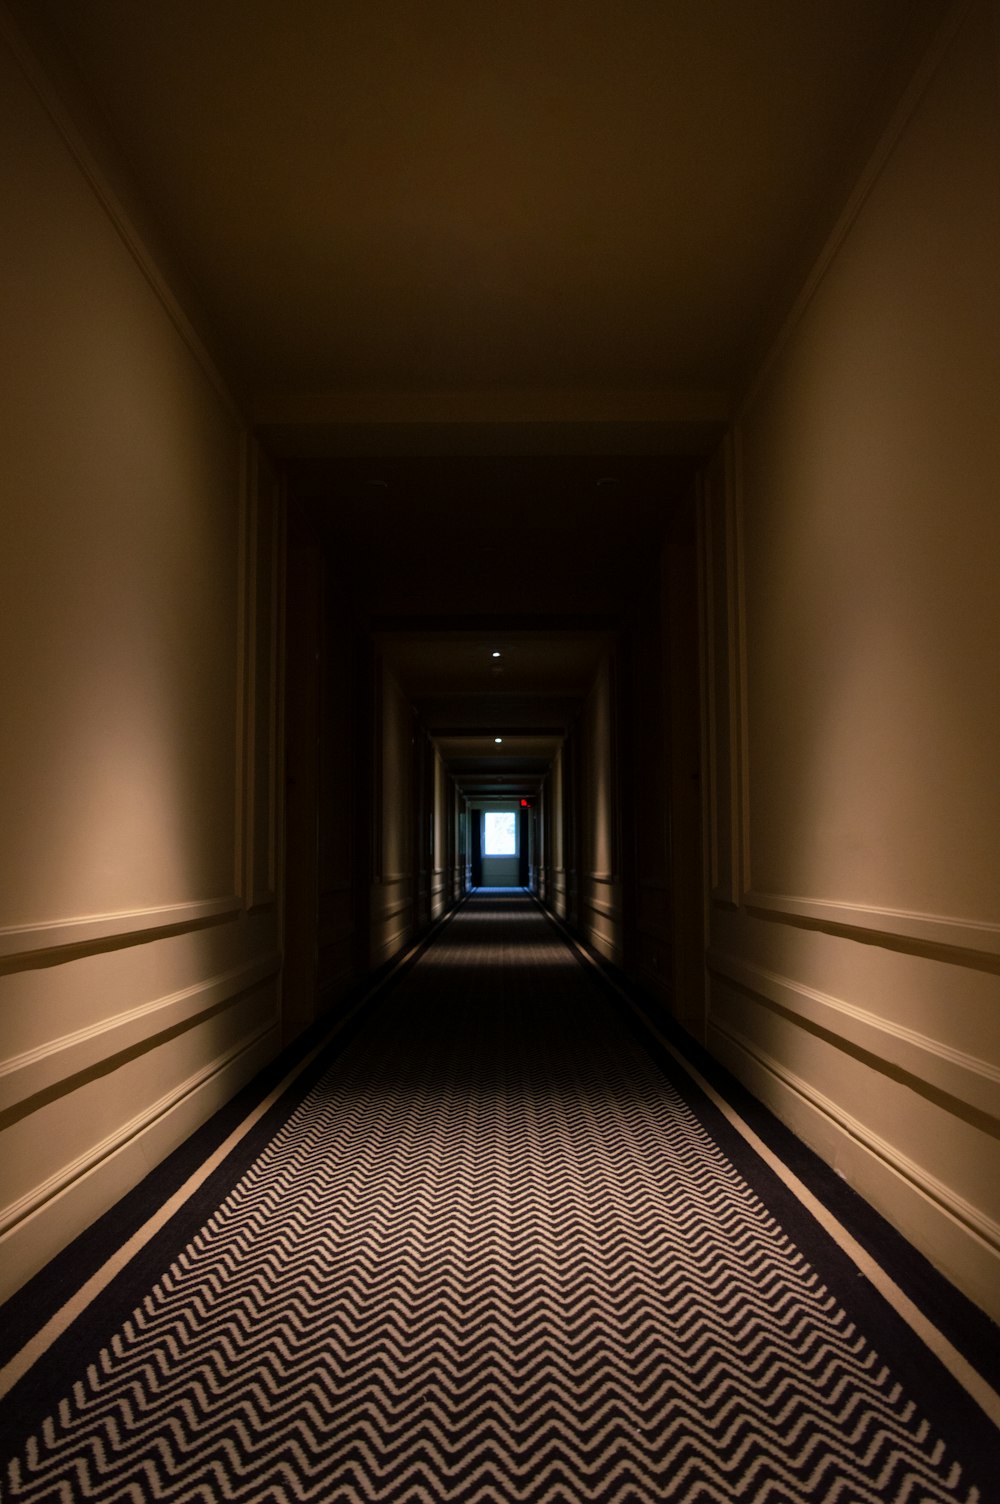 a hallway with a door